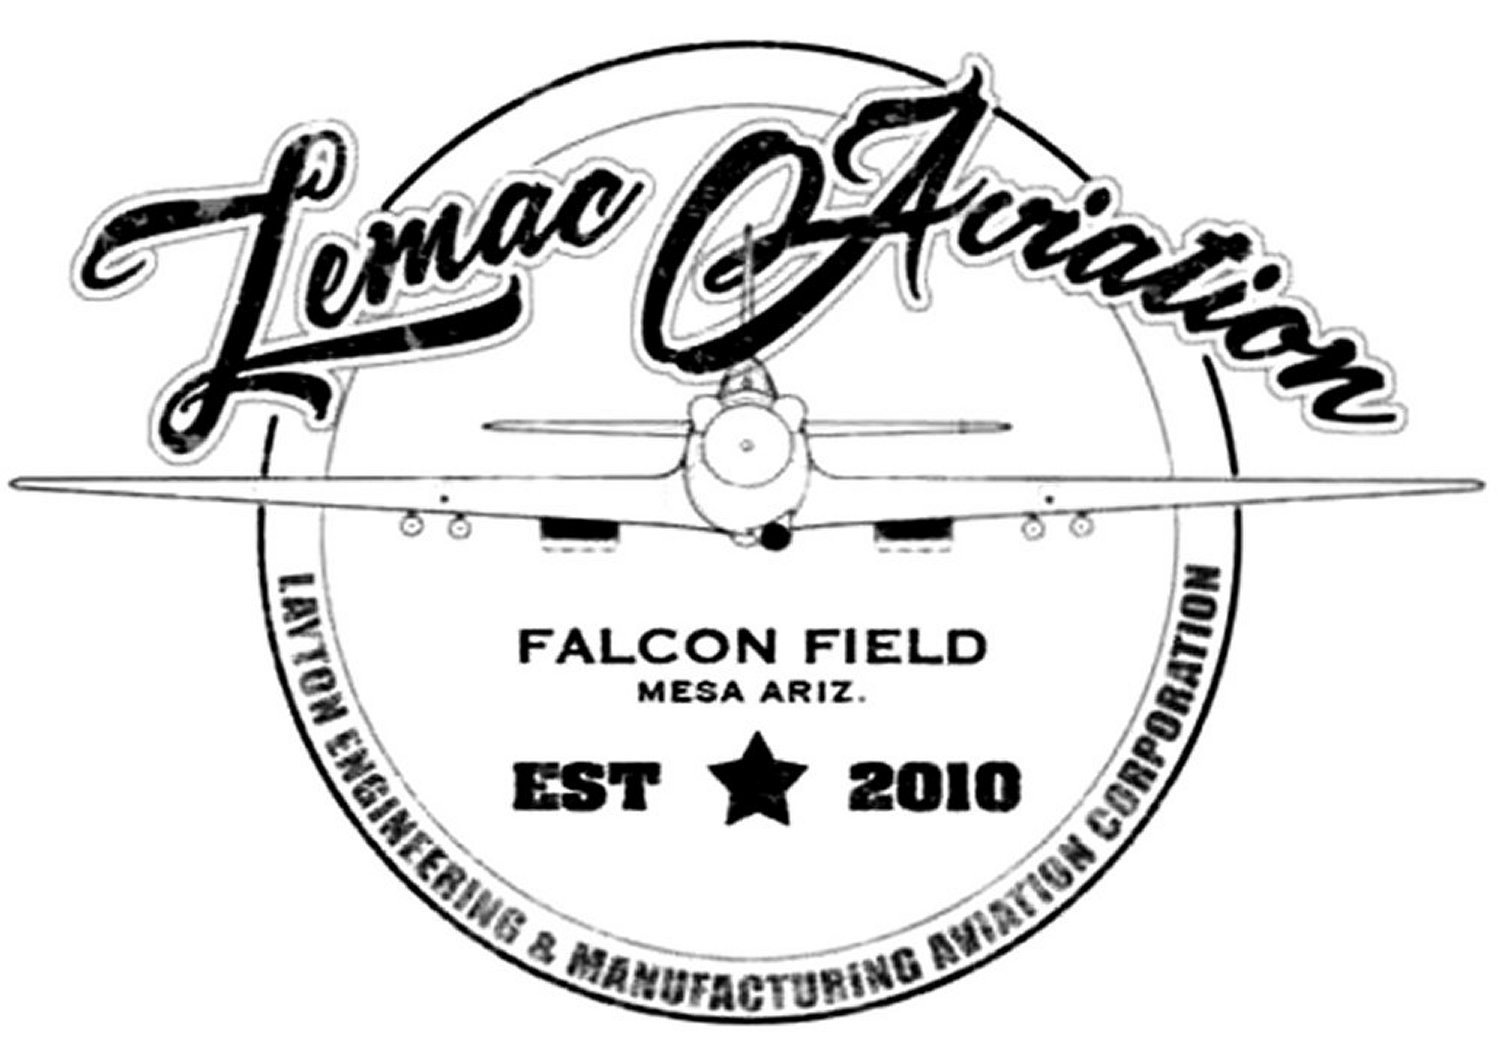 Lemac – Aviation